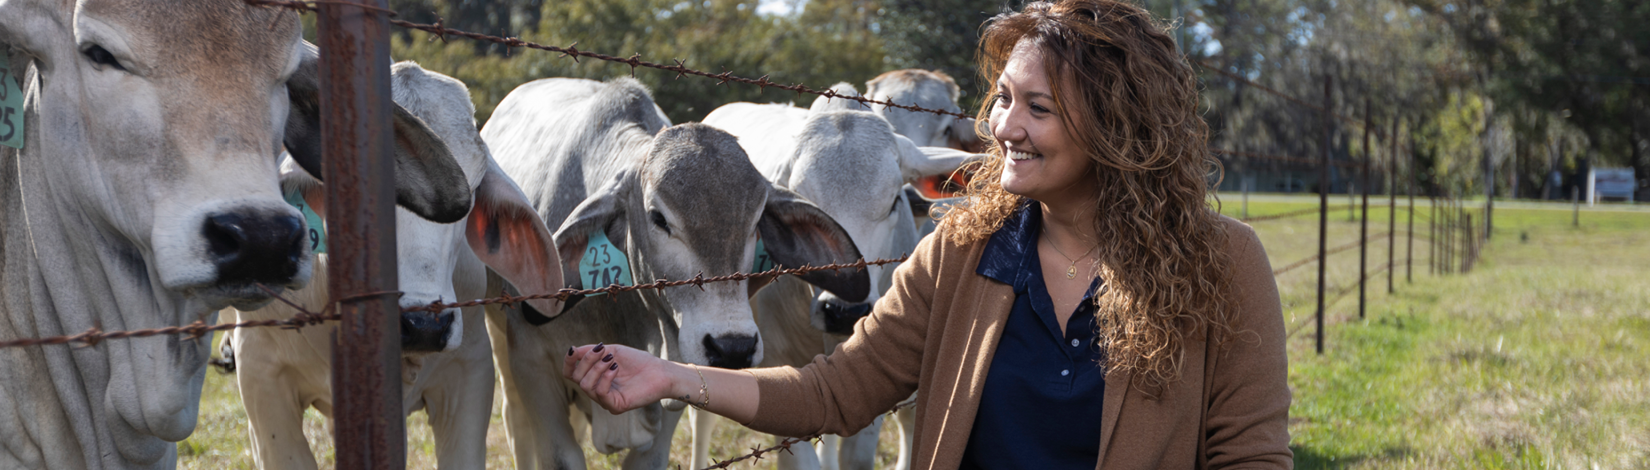 Dr. Fernanda Rezende petting brahman cattle through fence